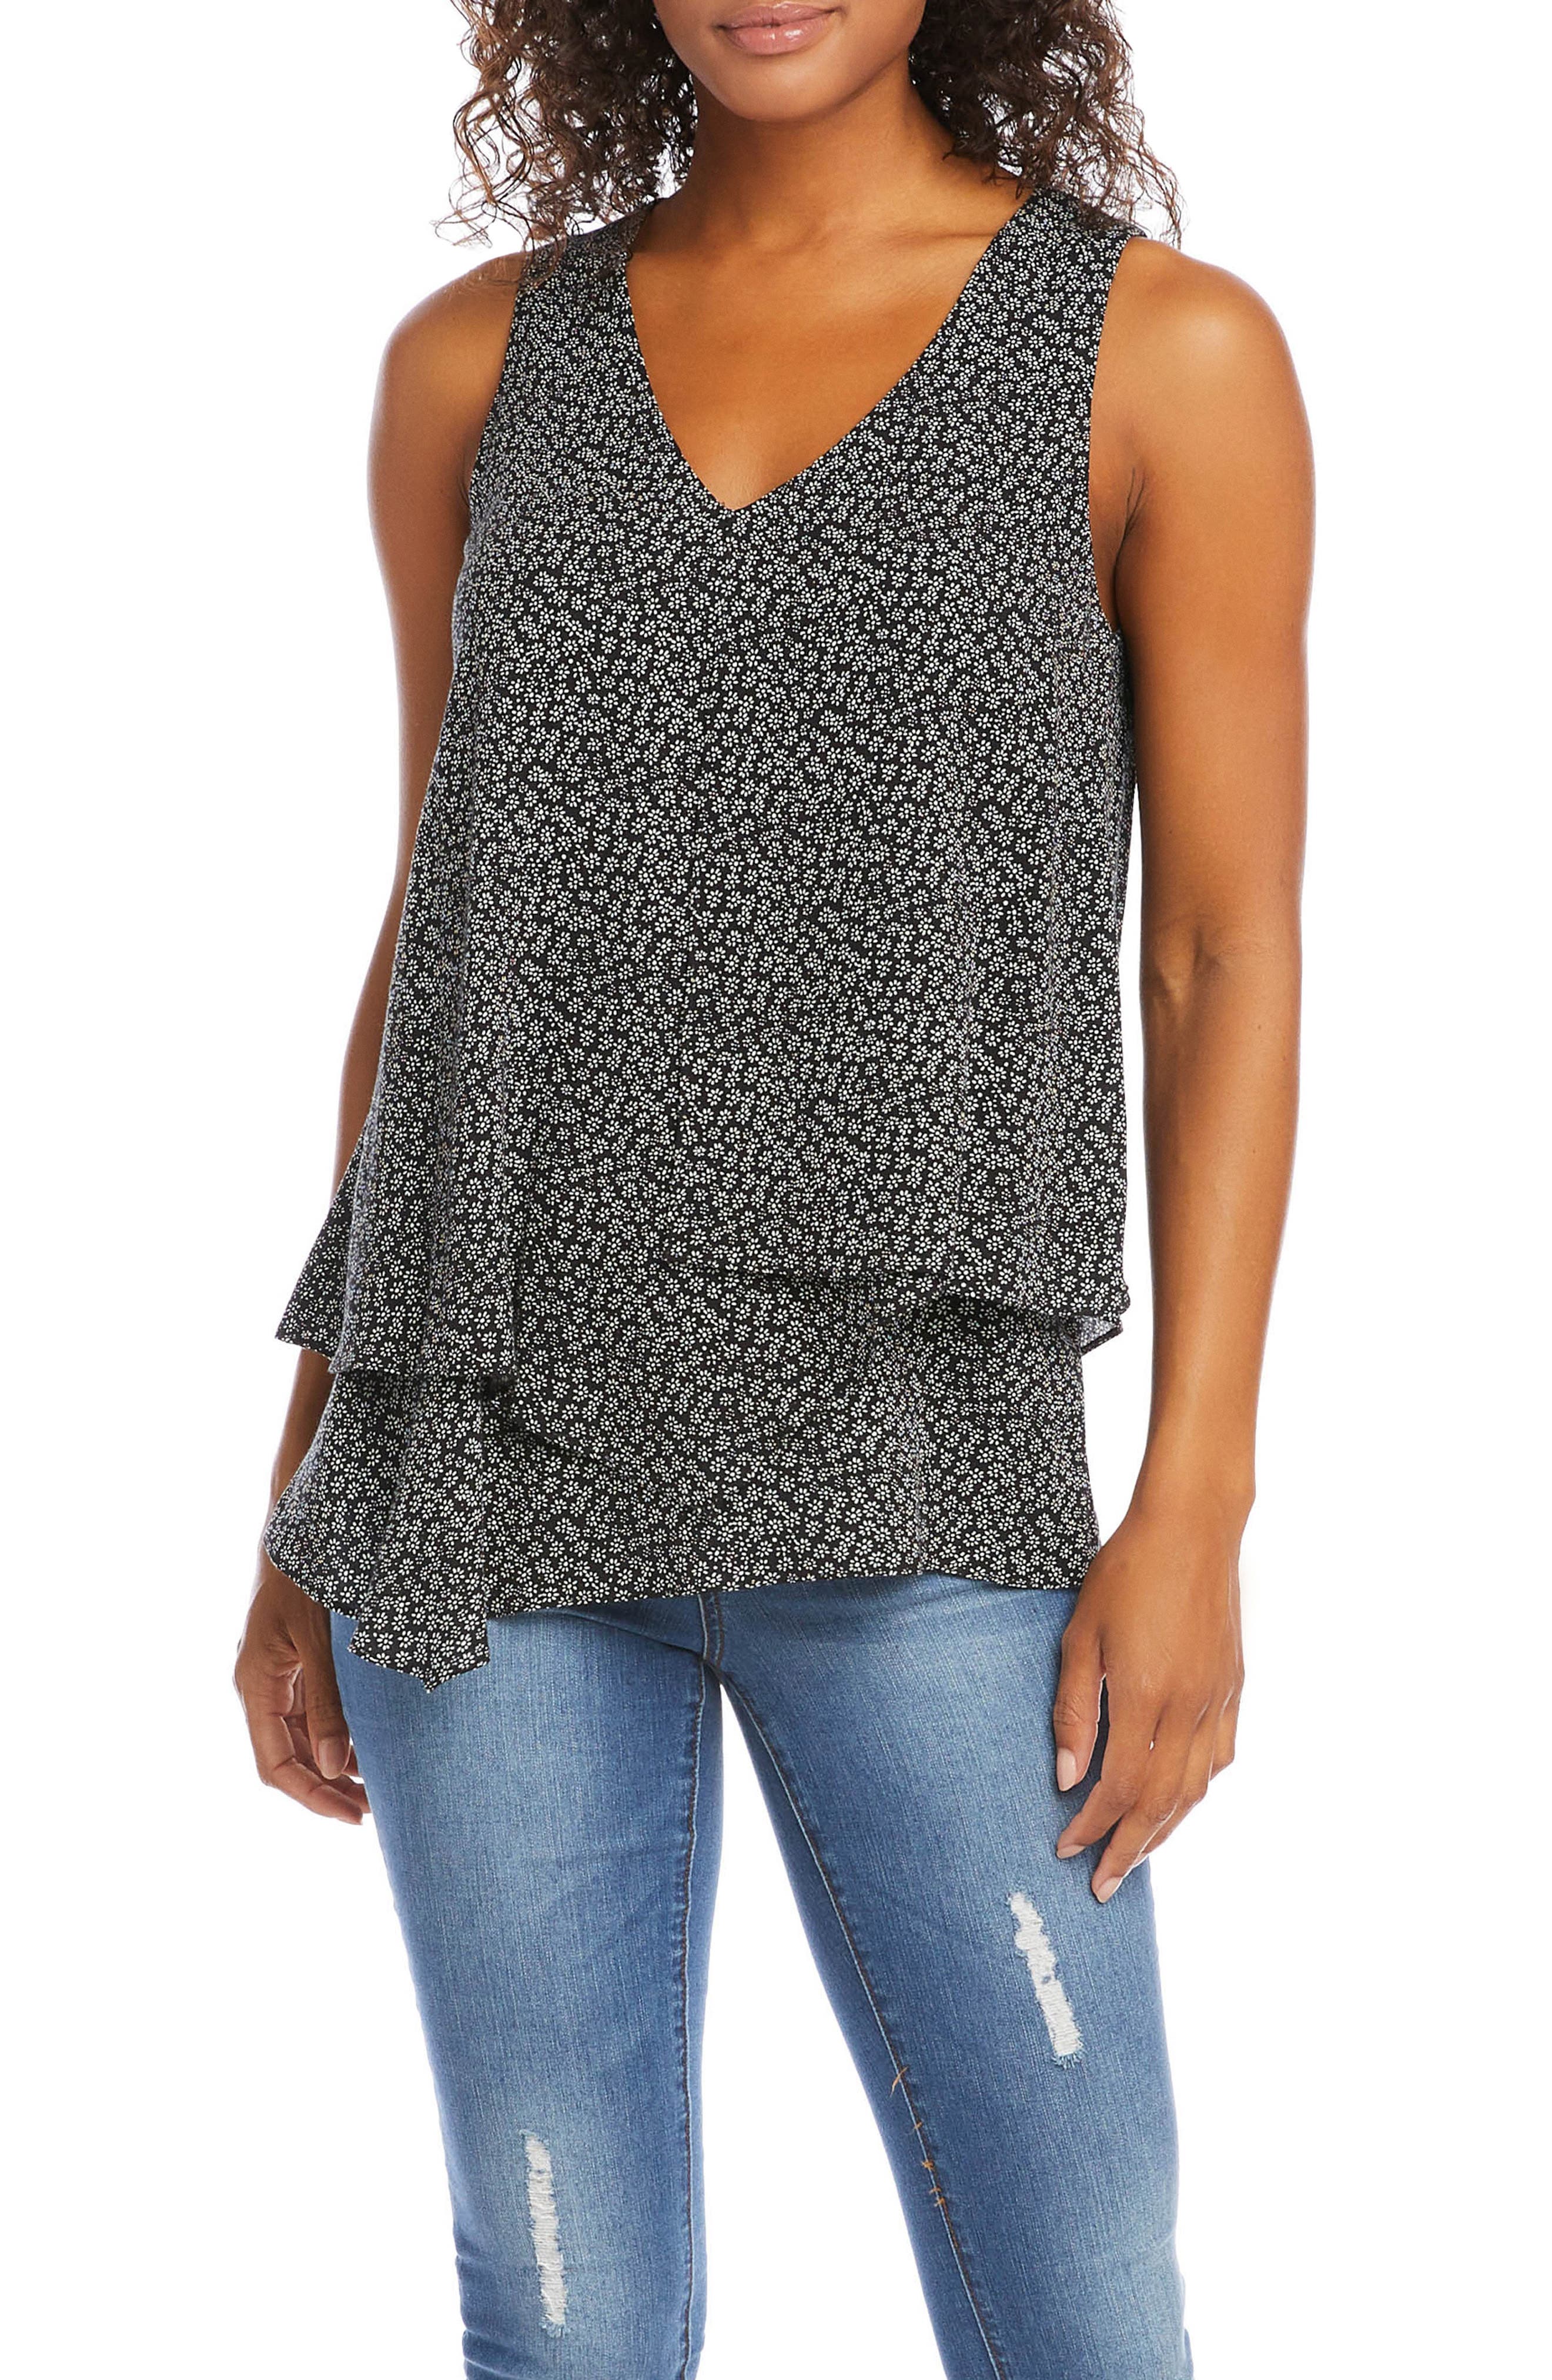 Leopard High Low Print Asymmetrical US V Neck Blouse Women Tops Hem Shirt